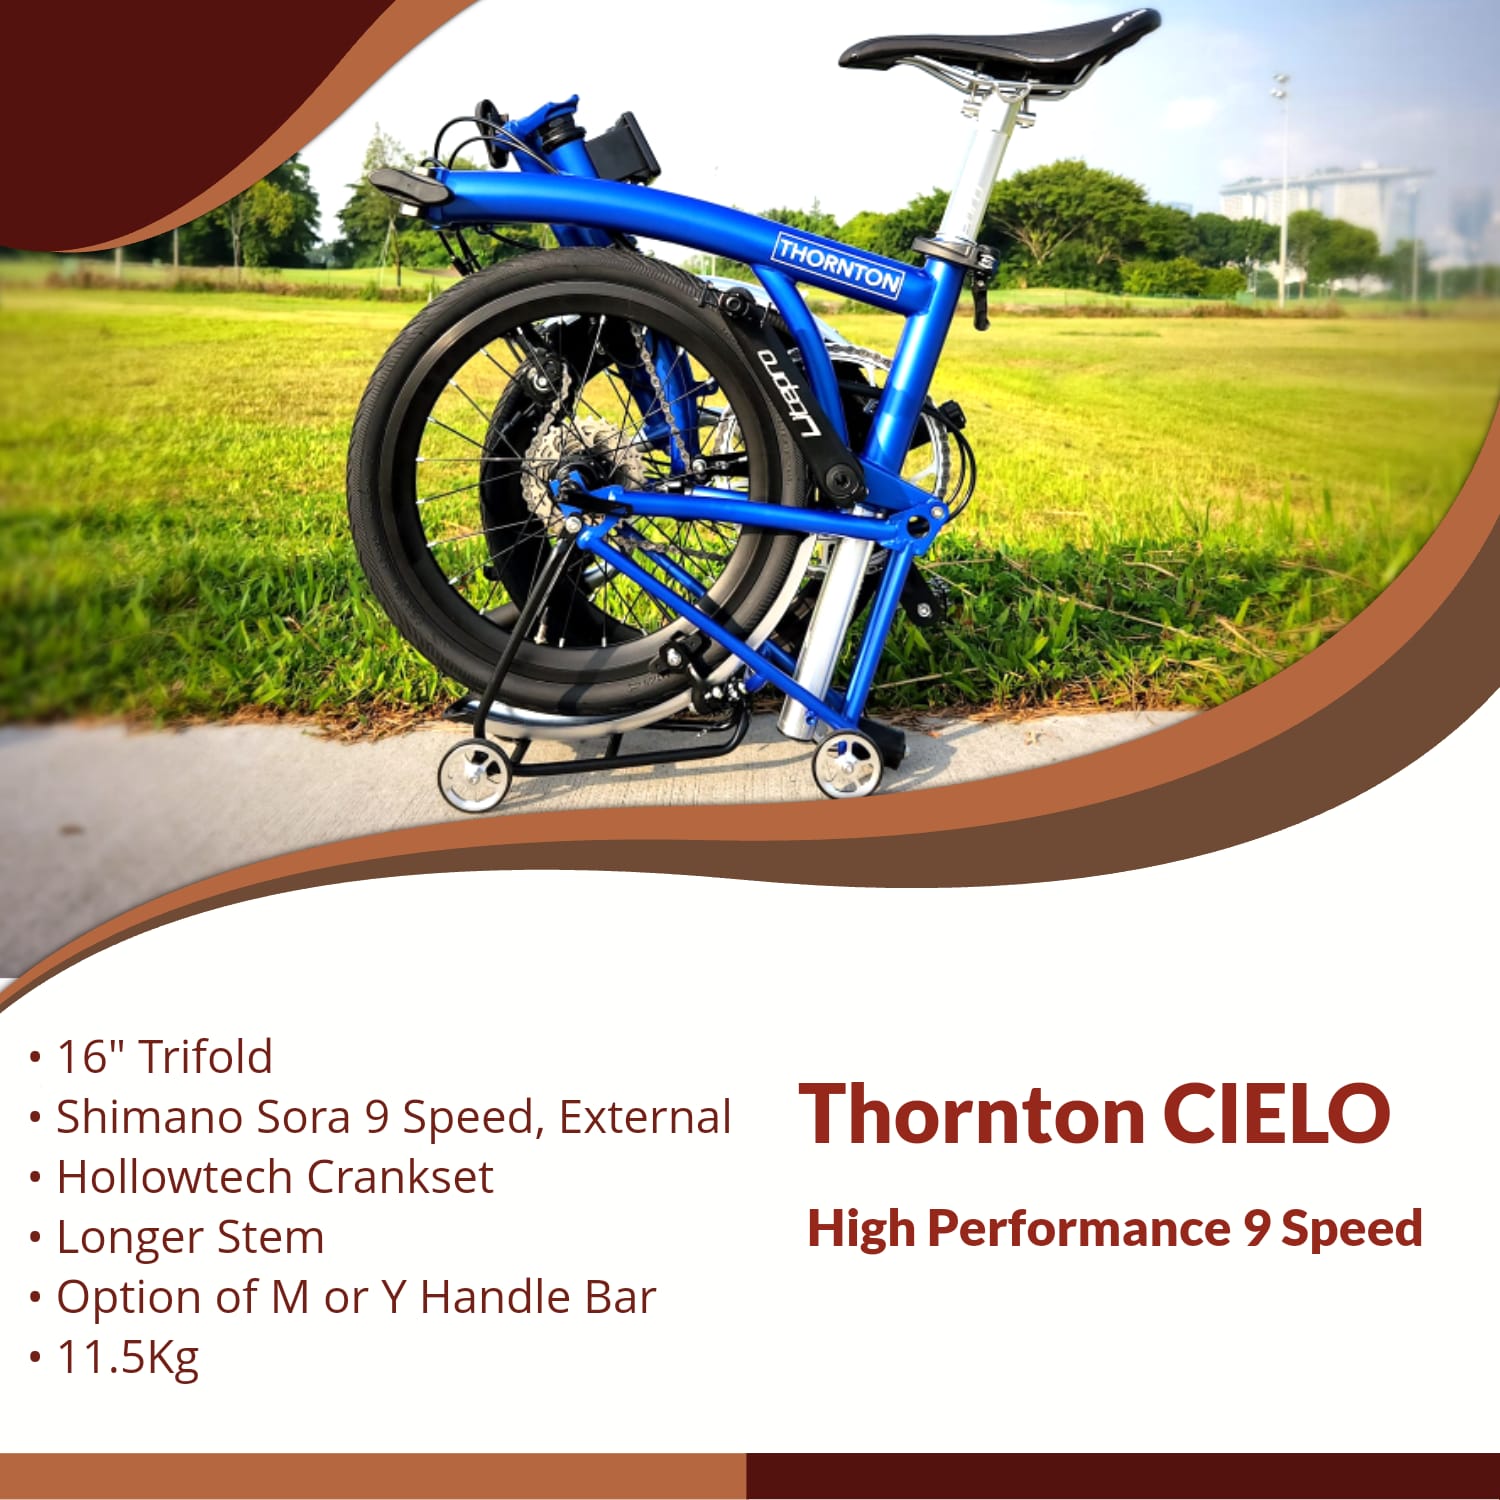 THORNTON CIELO | 16" Trifold, 9 Speed, Hollowtech